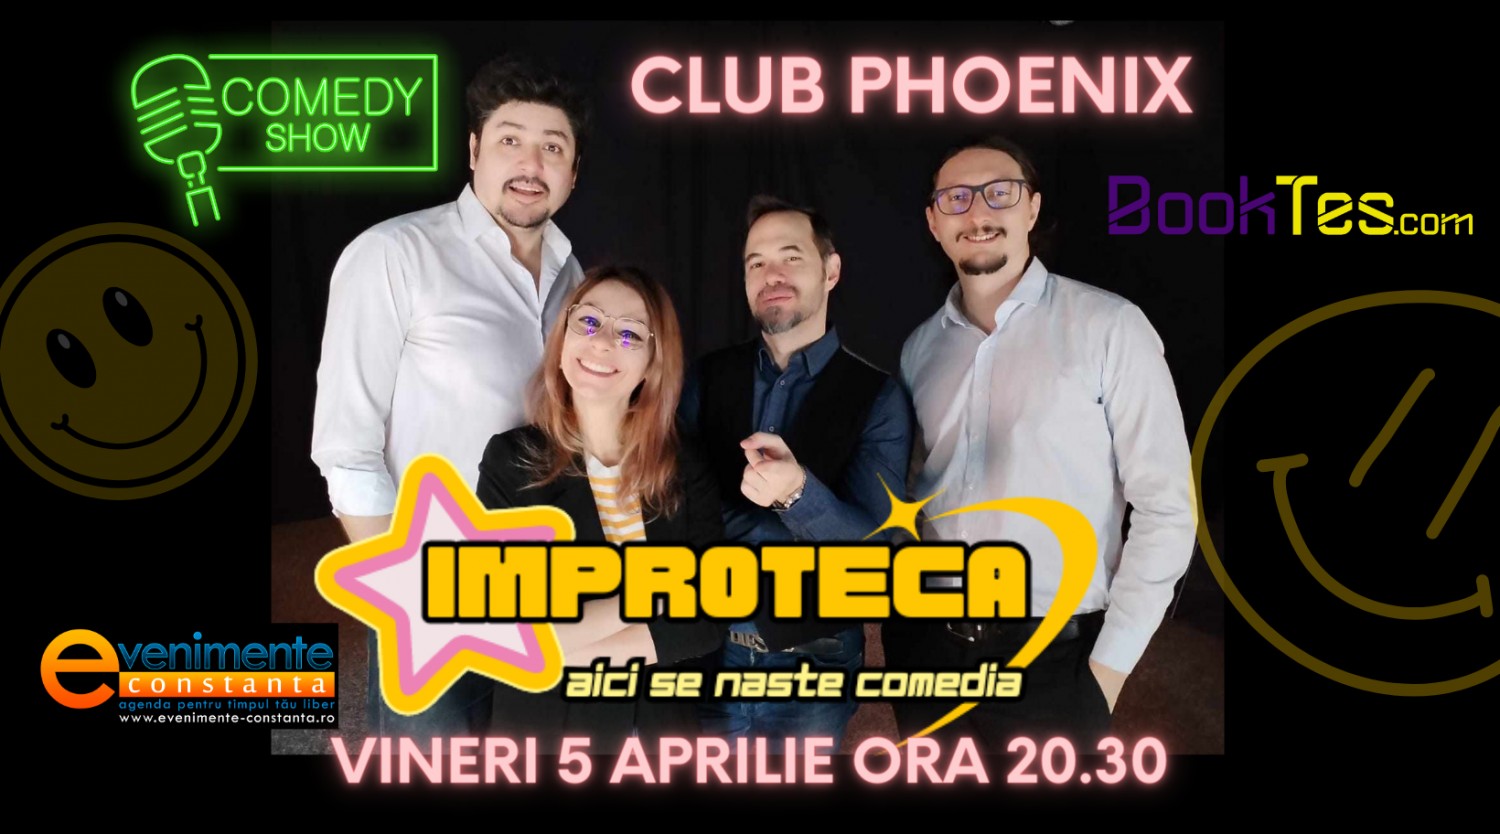 Spectacol interactiv de comedie cu trupa IMPROTECA la Club Phoenix